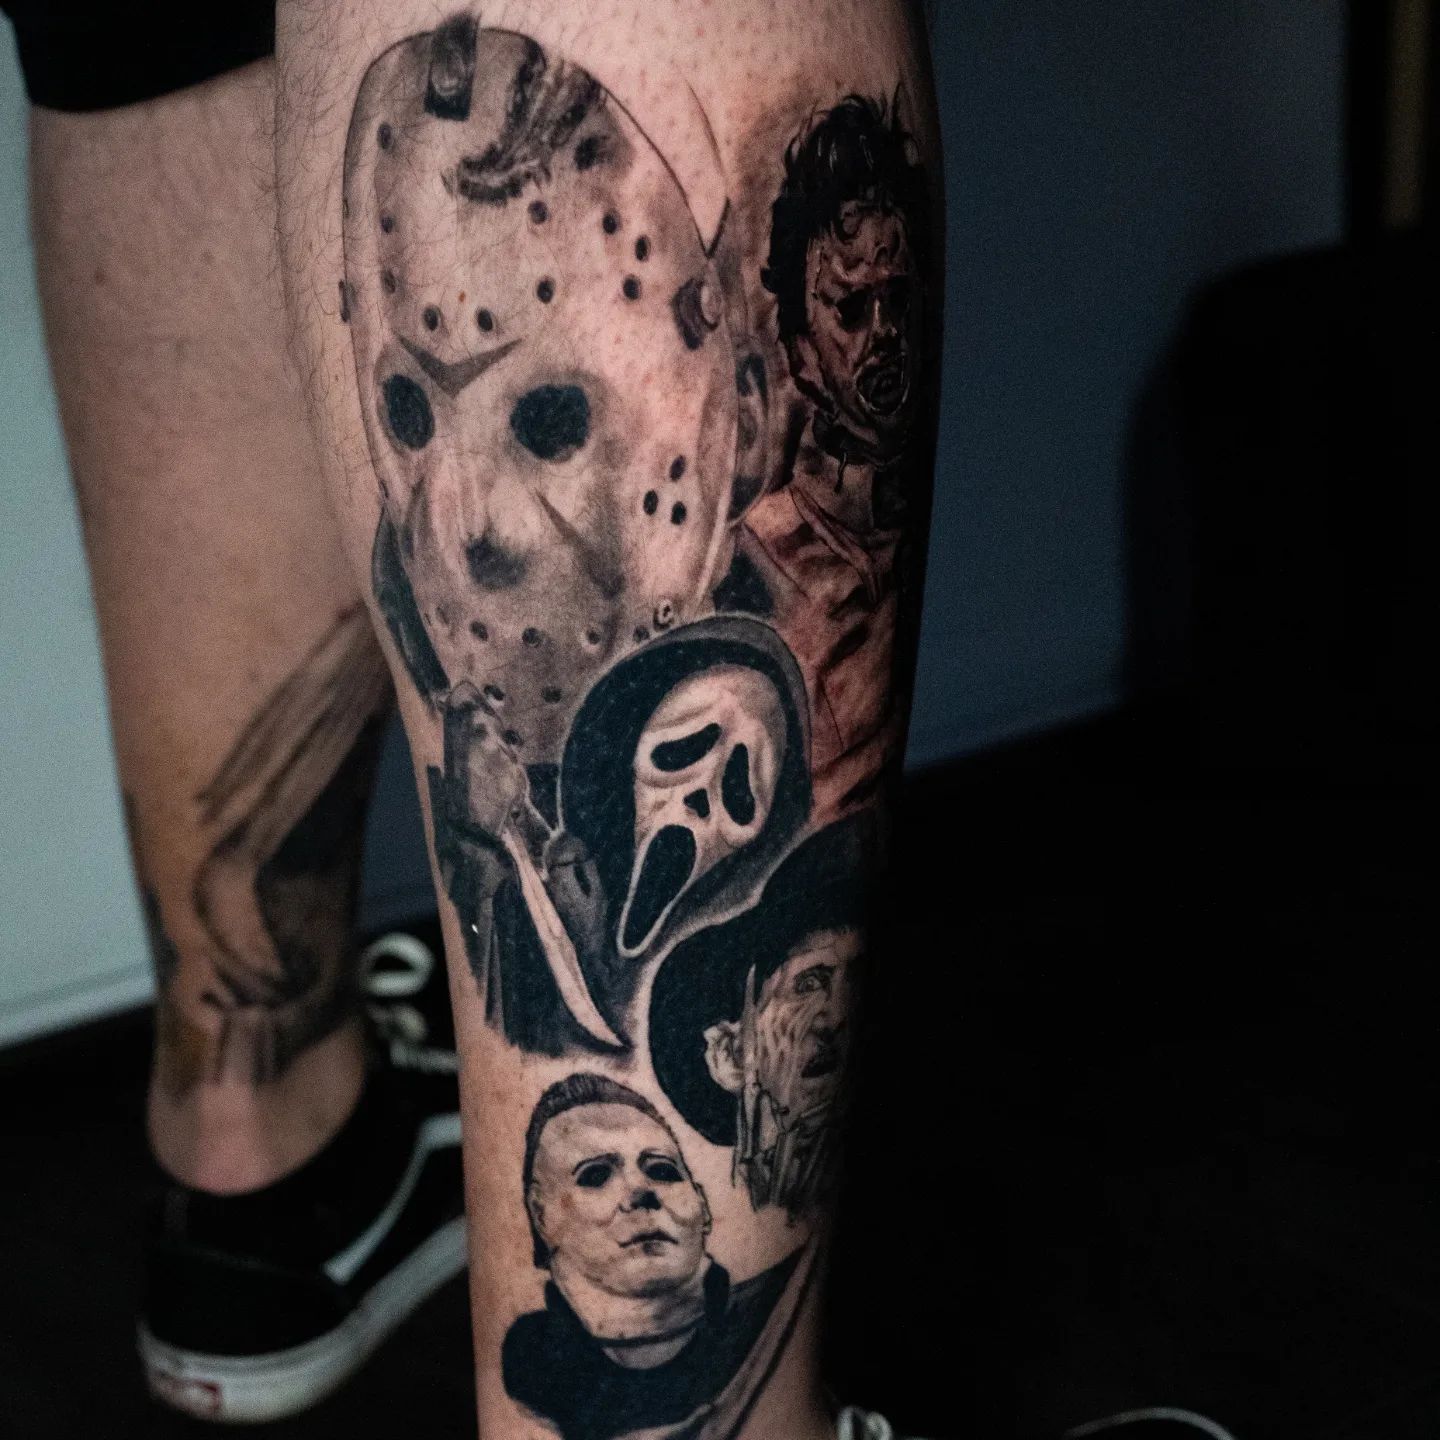 Koko-Loko Tattoo - Sleeve done by @tudorbtattoo #tattoo #zombies #horror  #witch #skull #death #tombs #tombstone #sleevetattoo #bat #winged #dark  #athmosphere #derelict #crypt #kokolokotattoo #ink #tattoos | Facebook